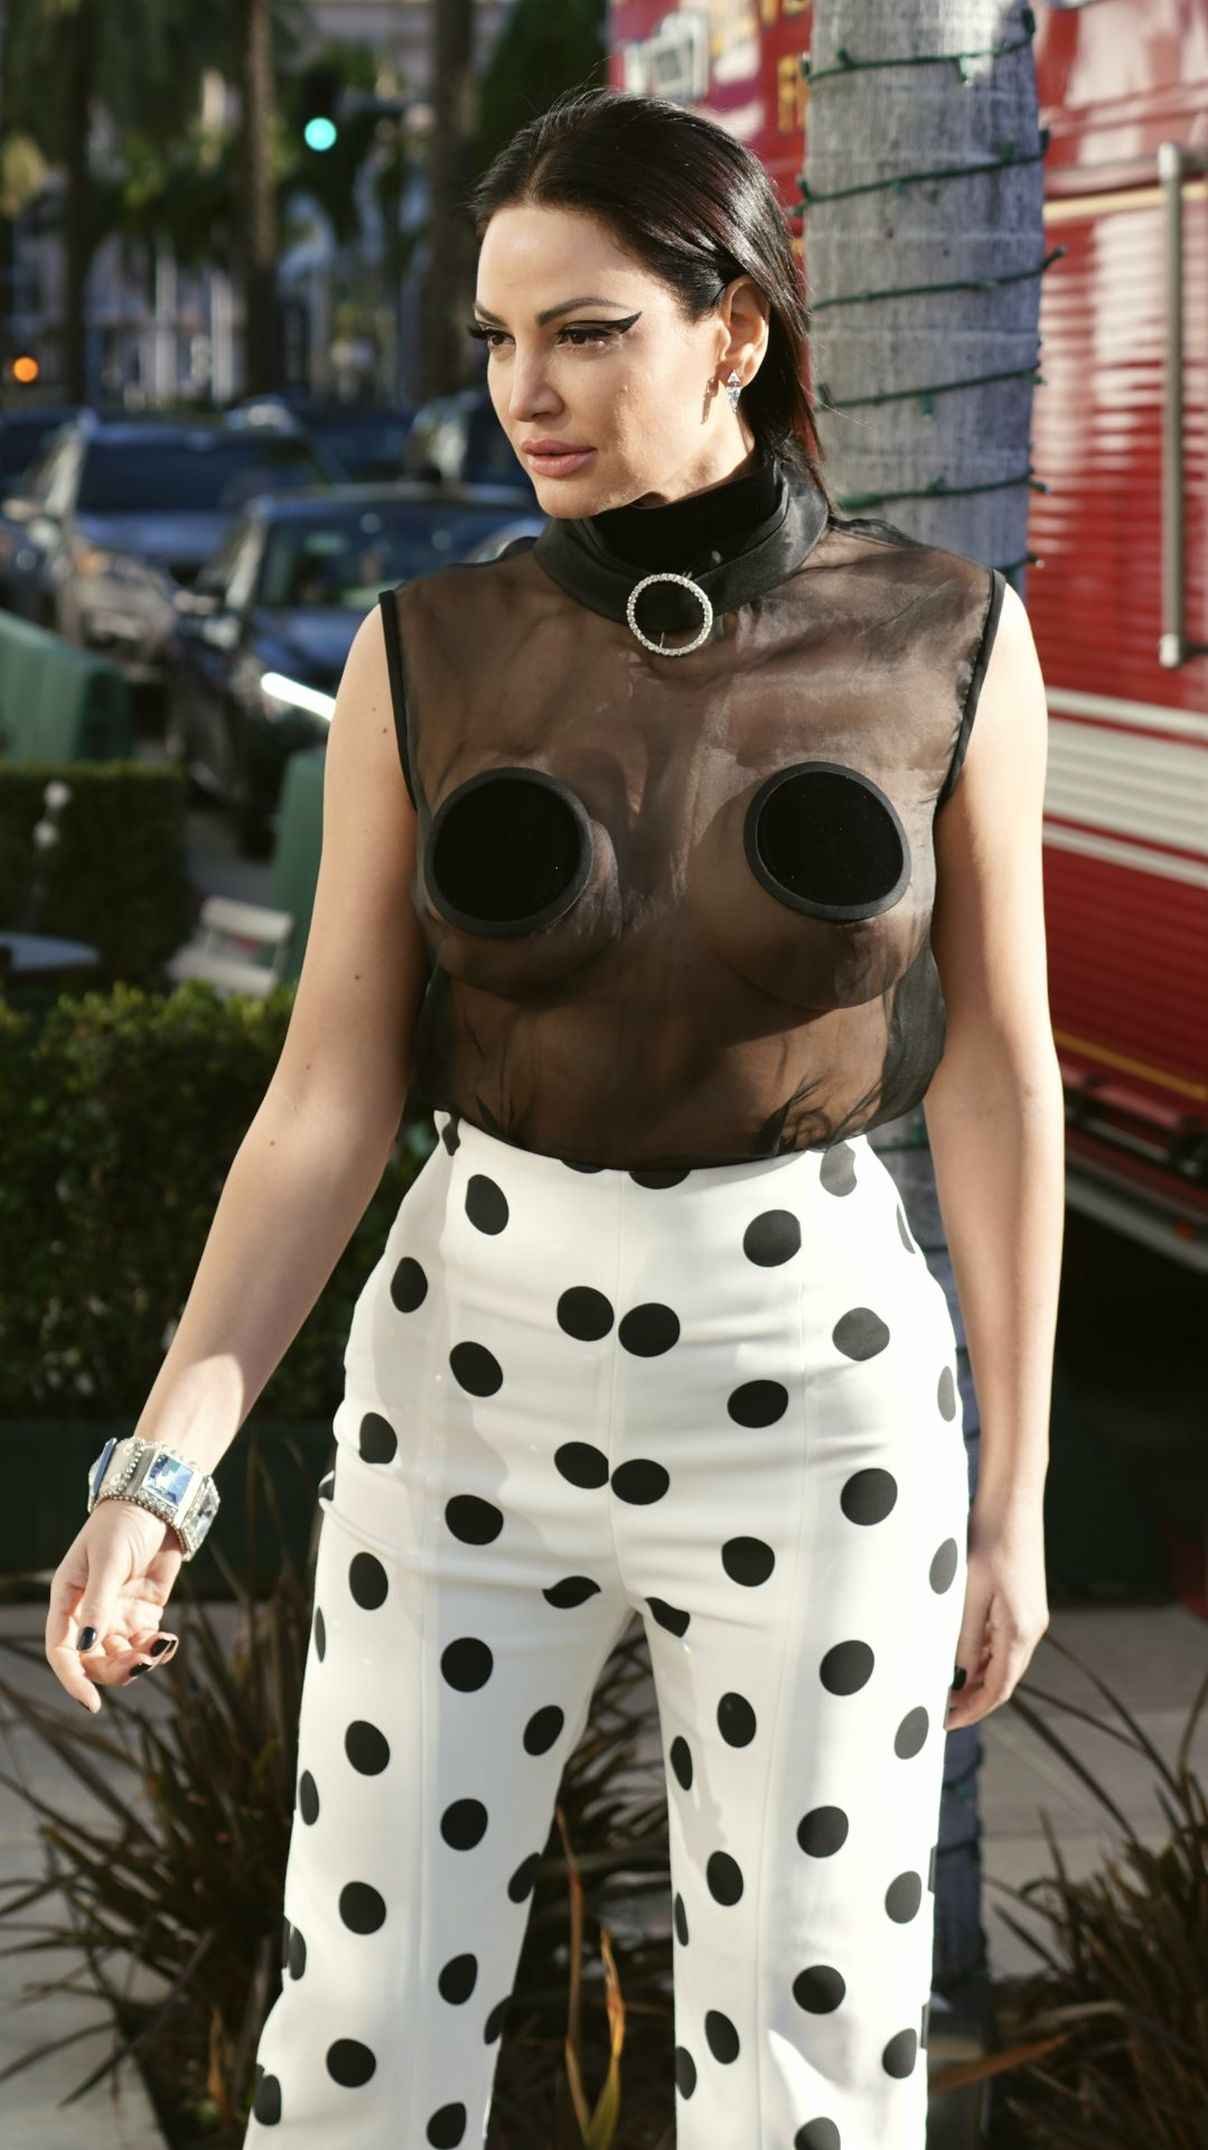 Bleona Qereti seins nus par trnsparence à Beverly Hills